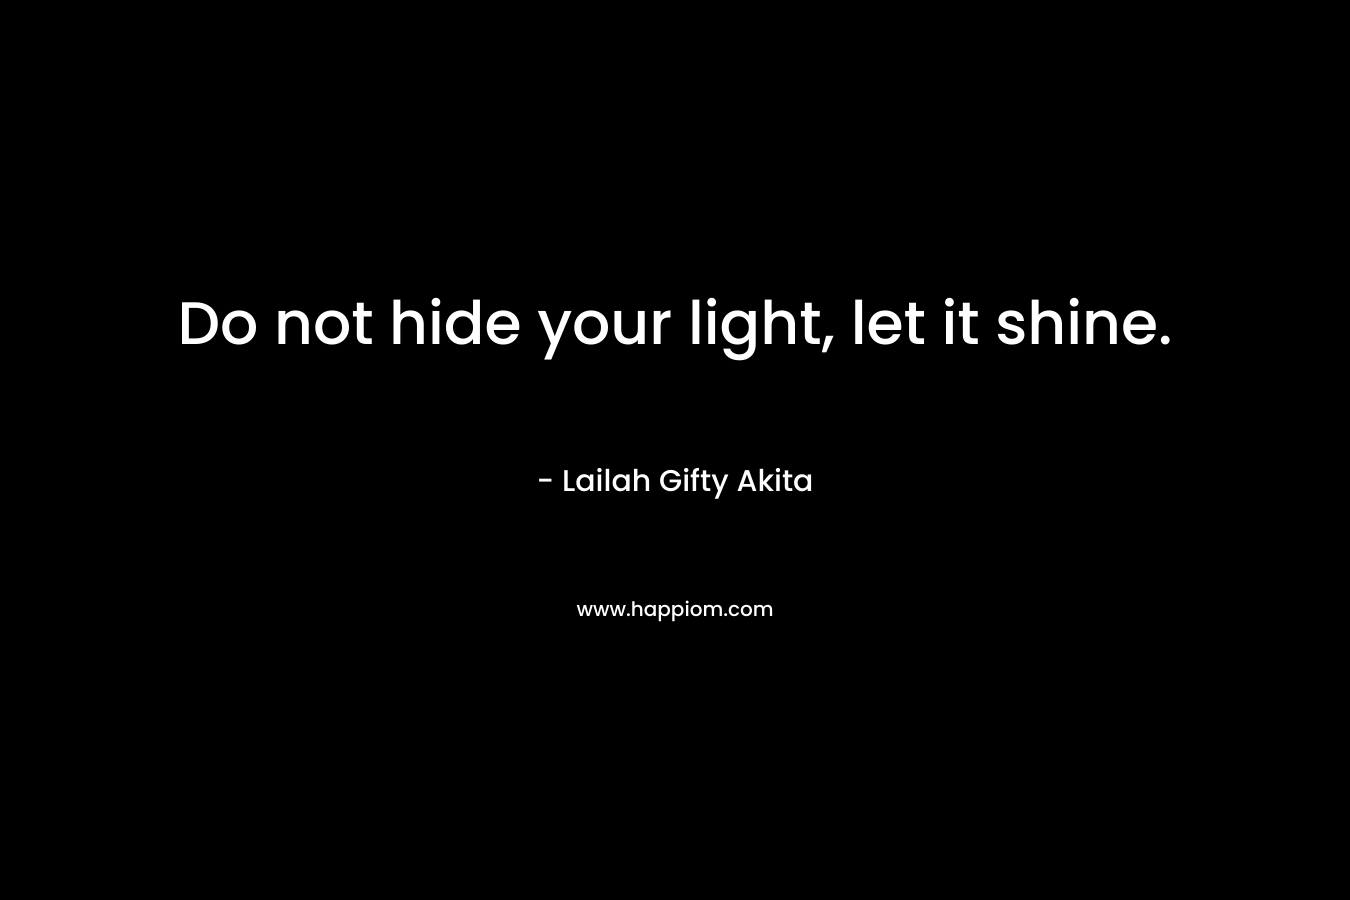 Do not hide your light, let it shine.